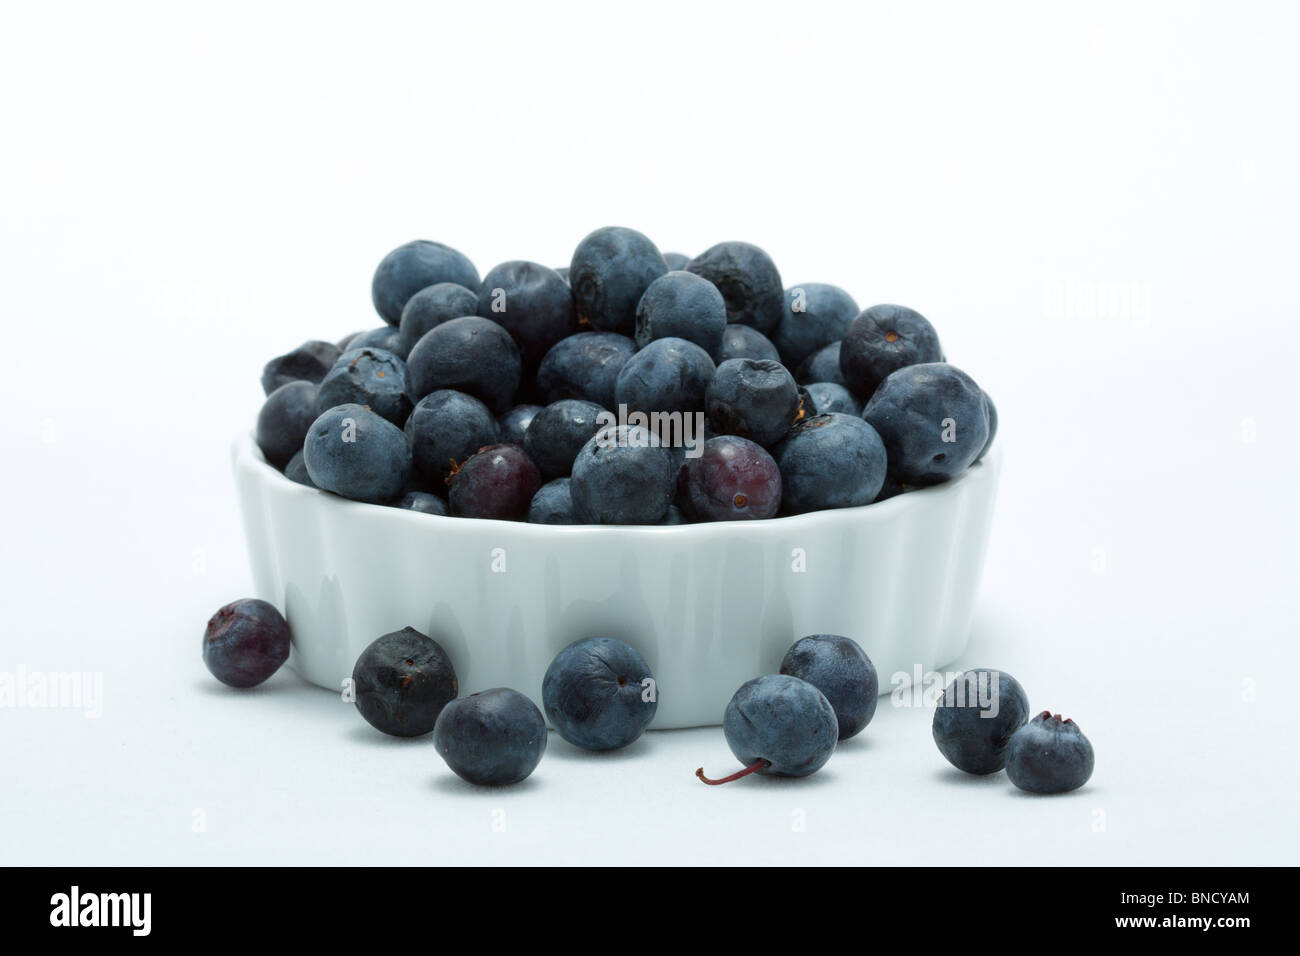 Blueberries in a white ramekin. Stock Photo